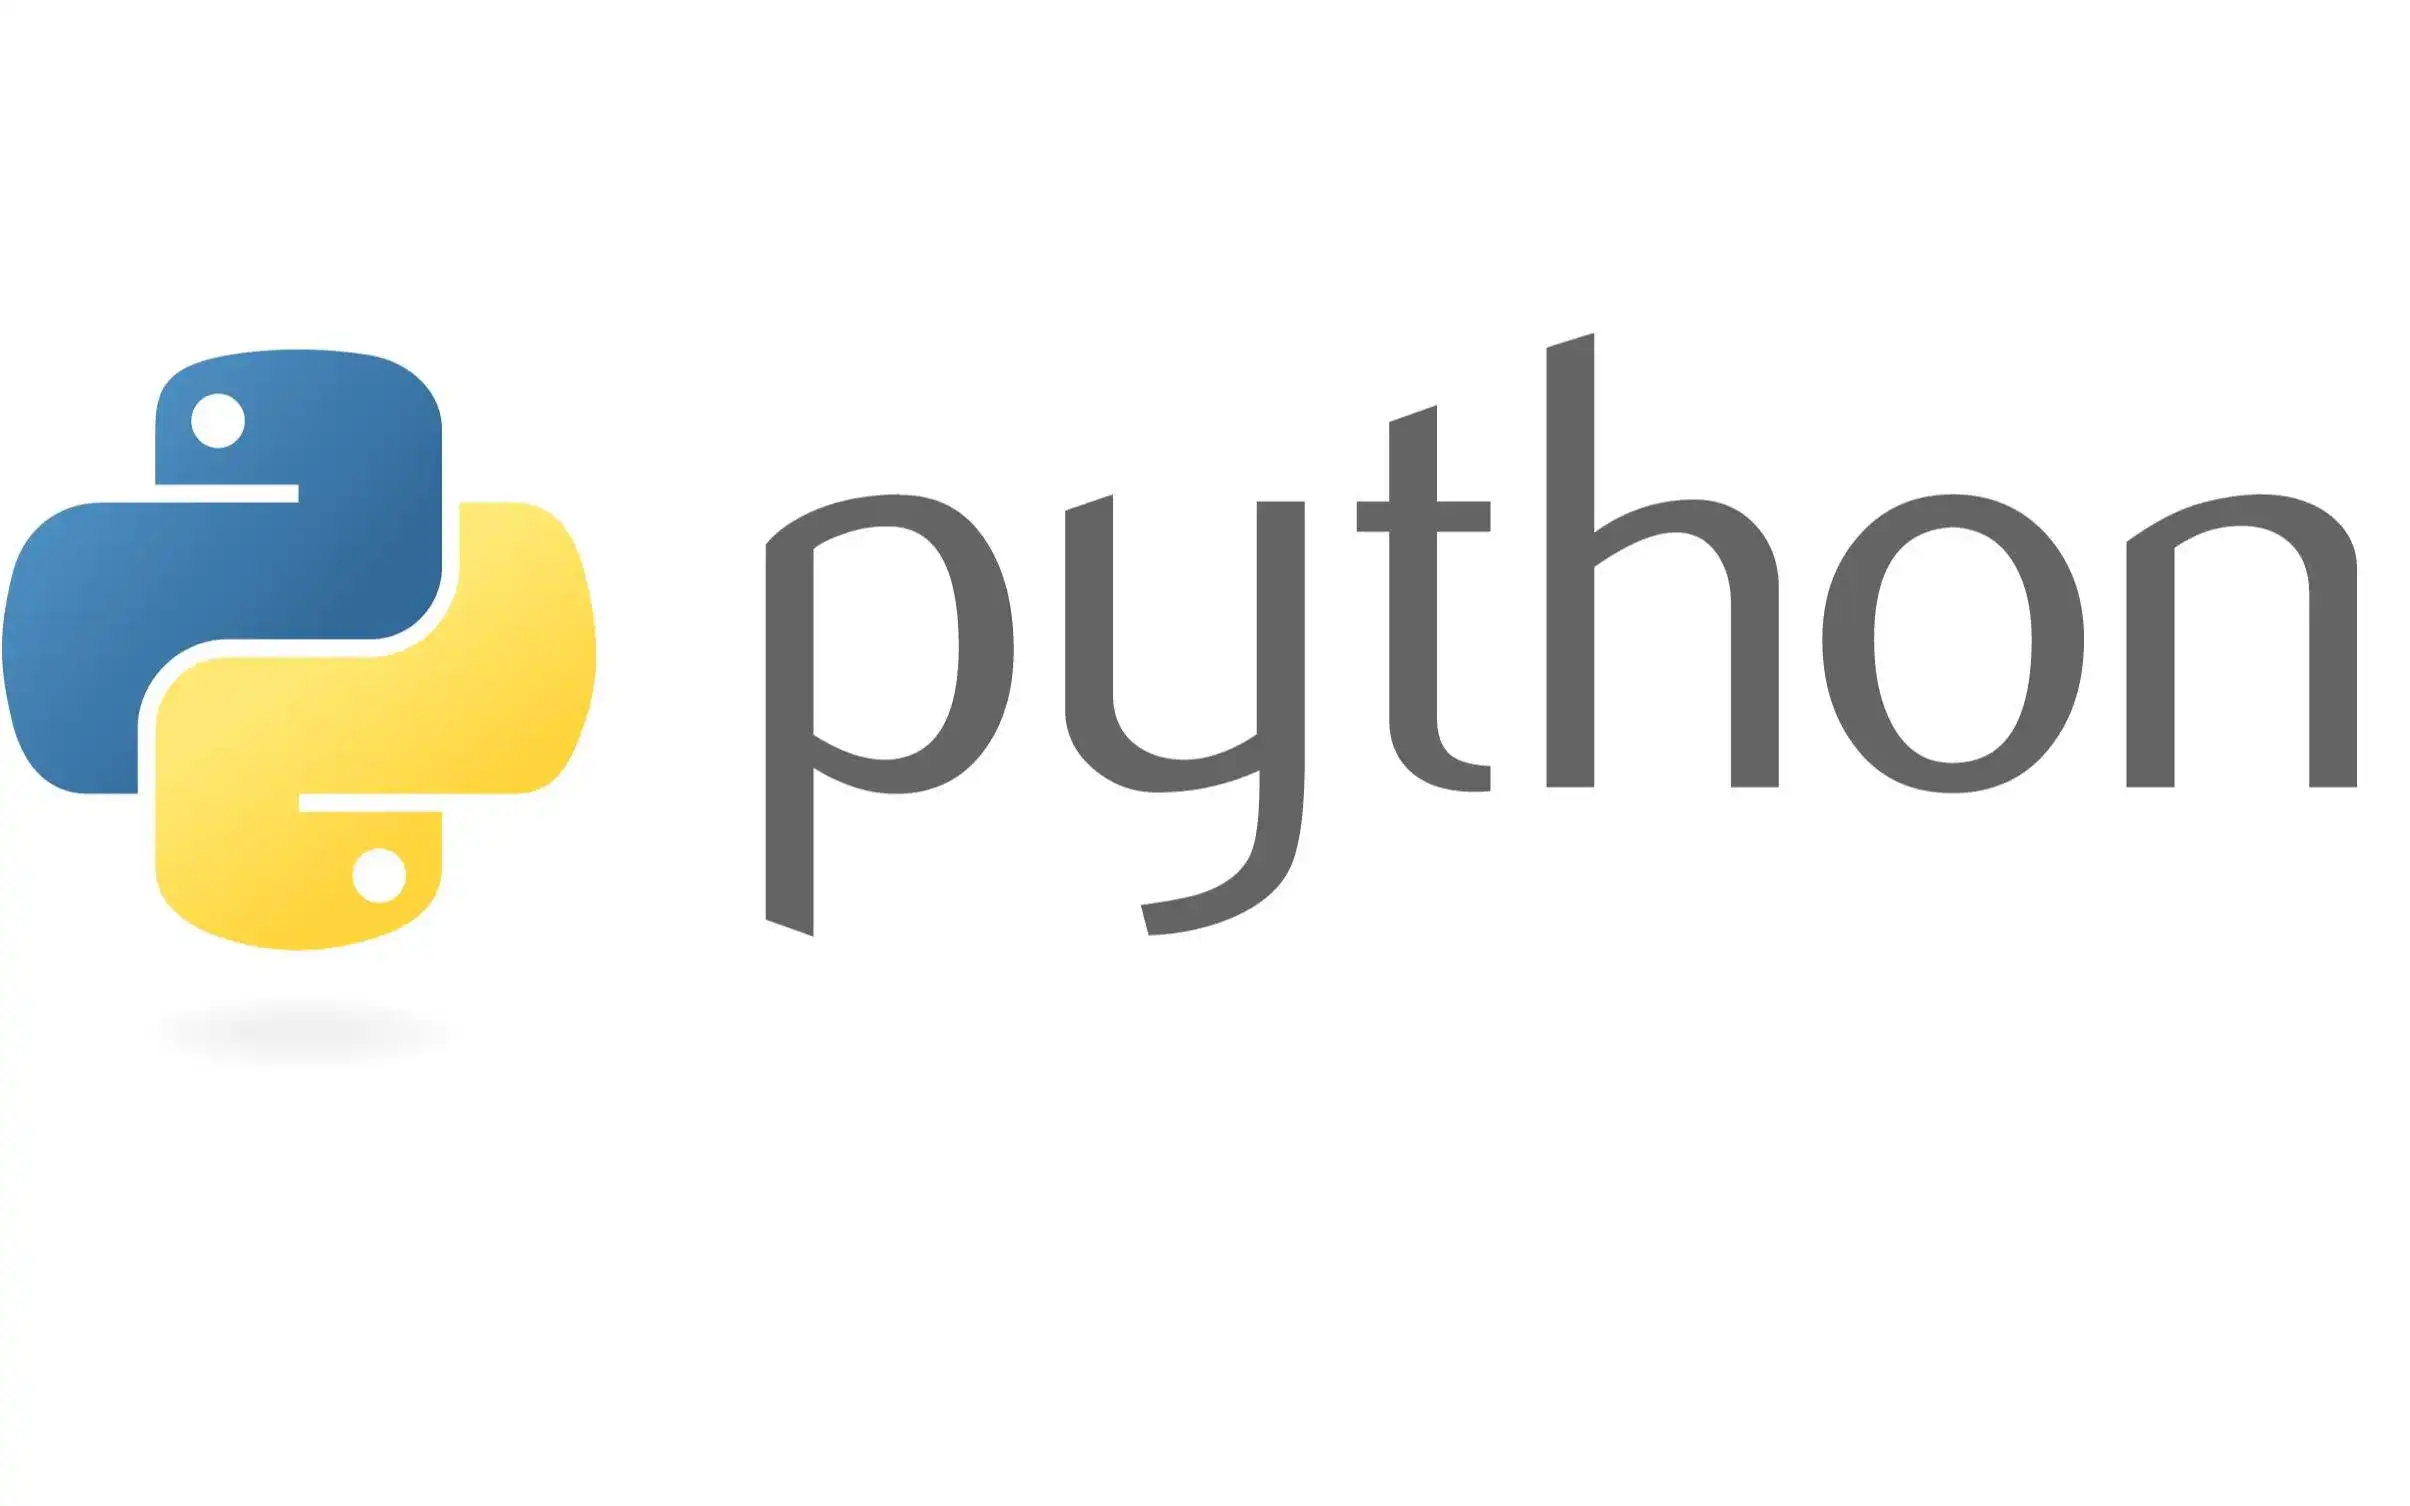 Python 函数装饰器 @functools.lru_cache